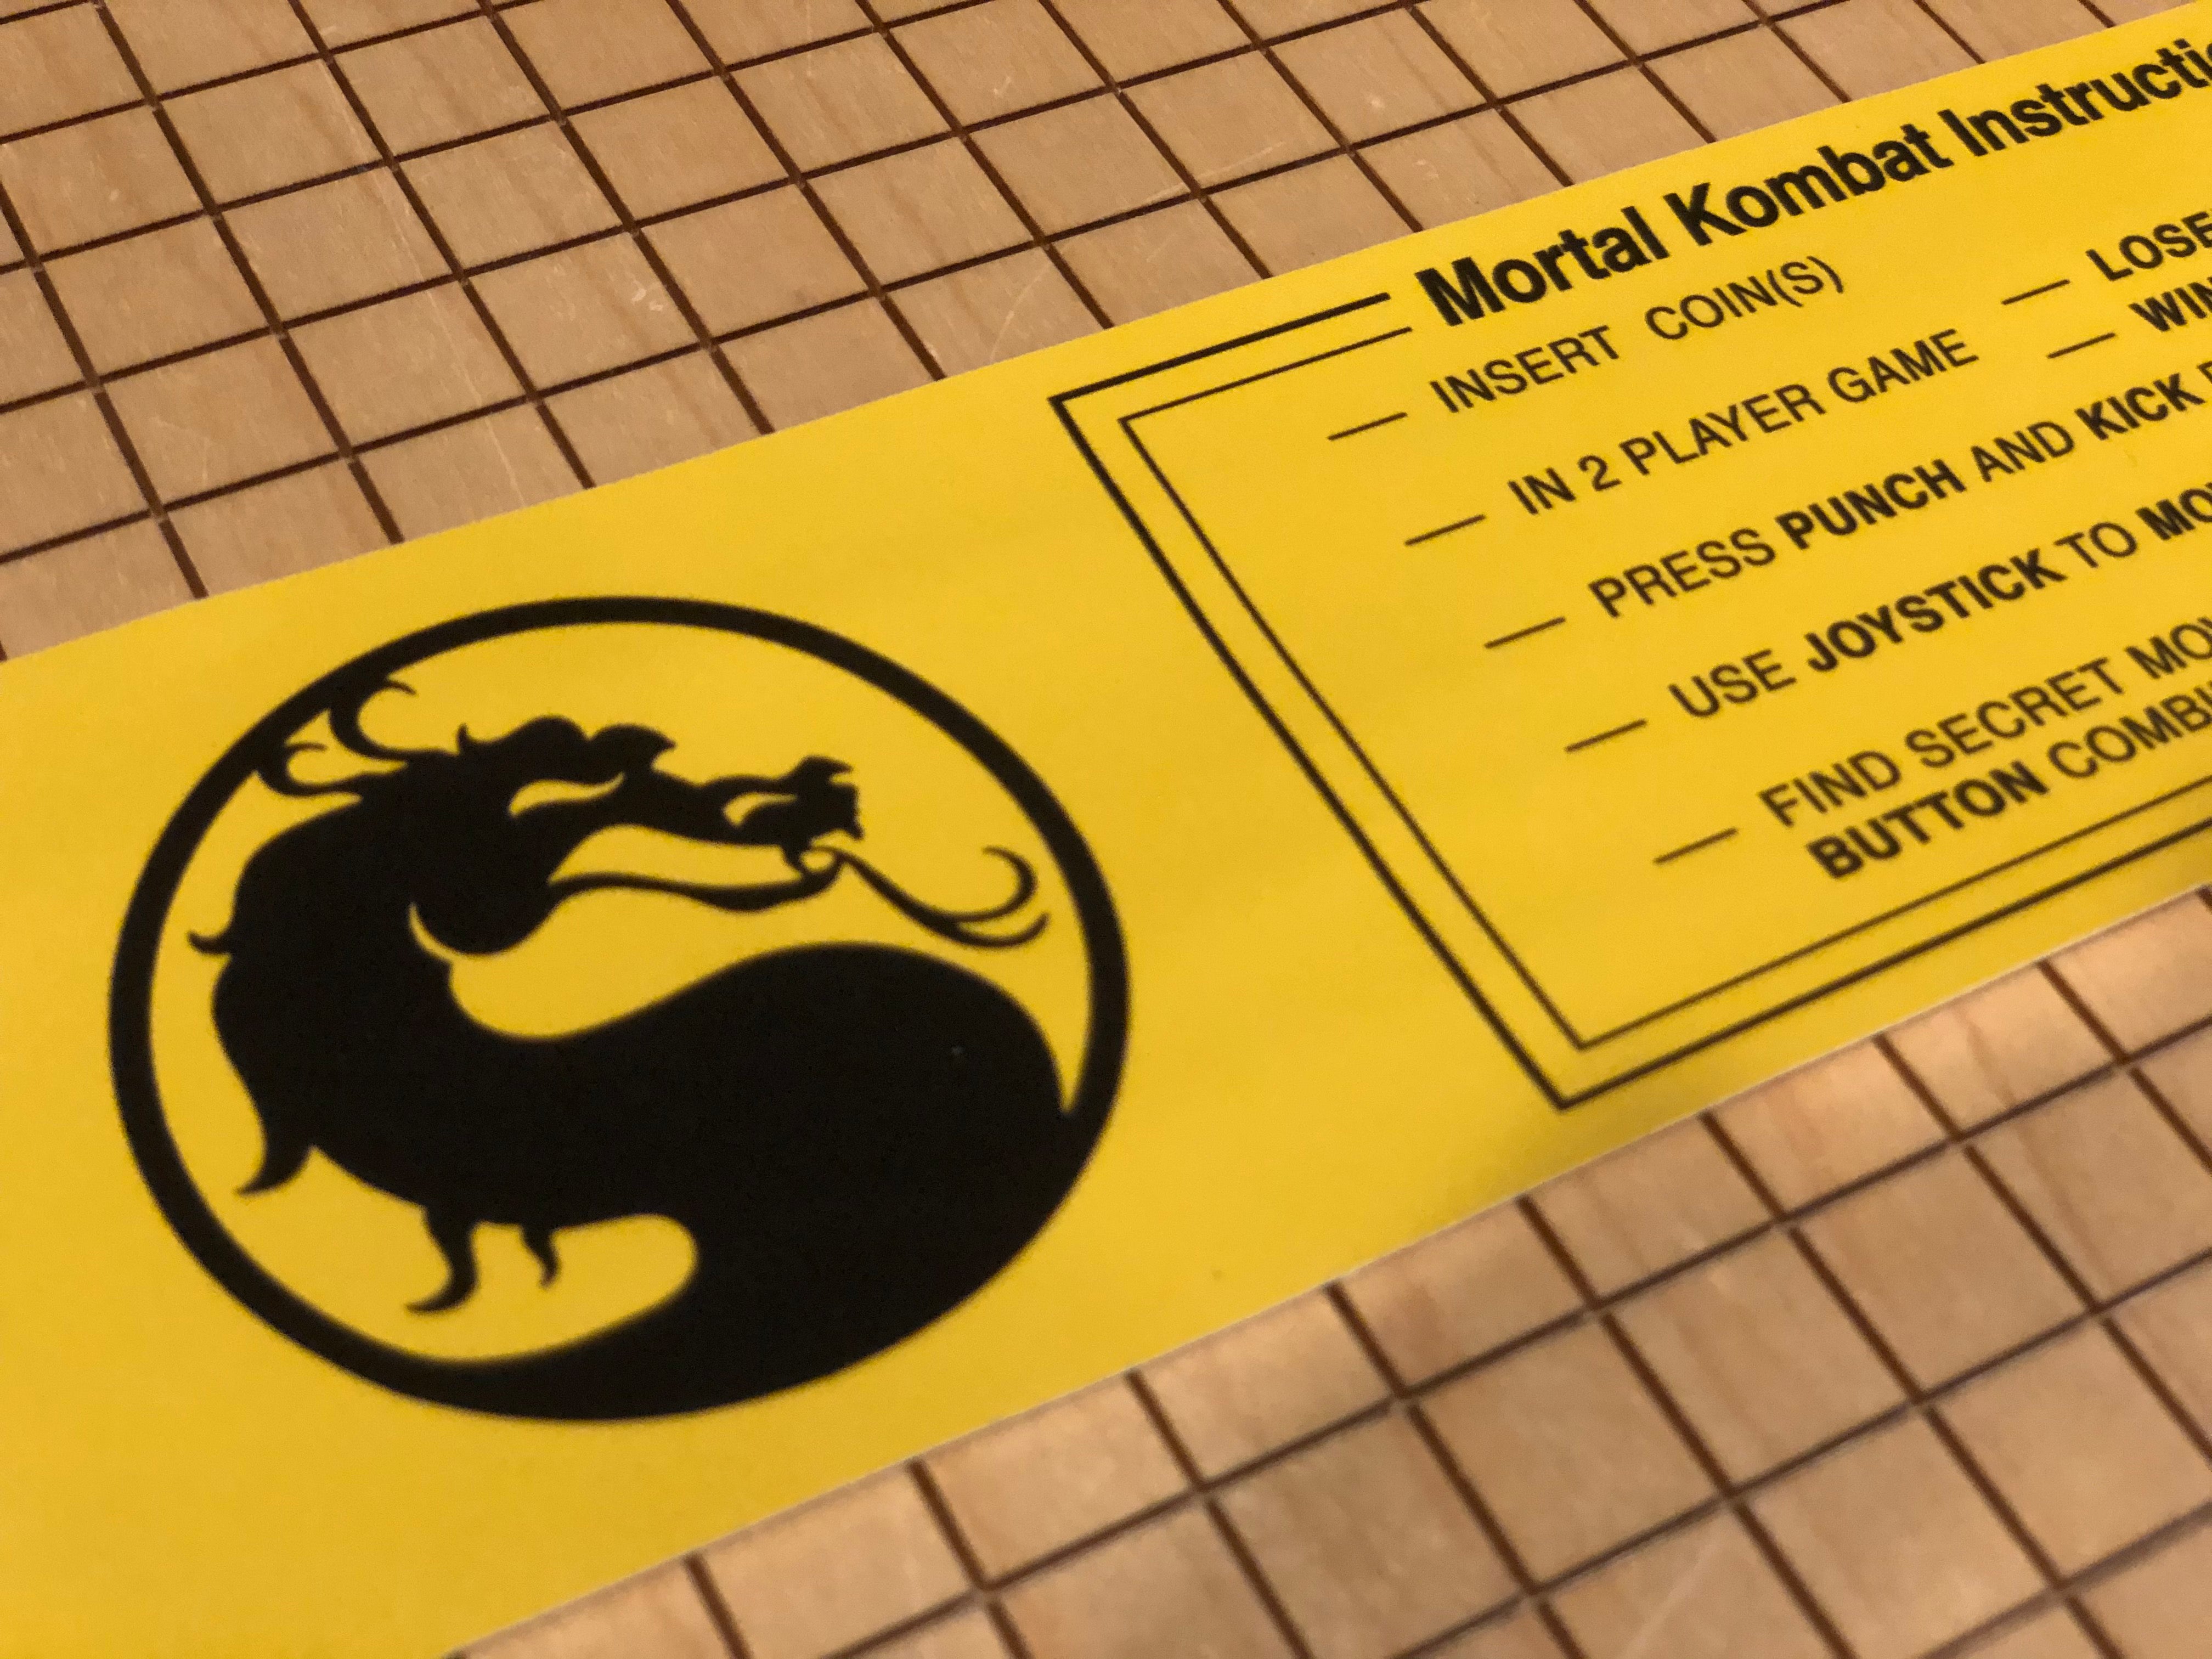 Mortal Kombat Instruction Card